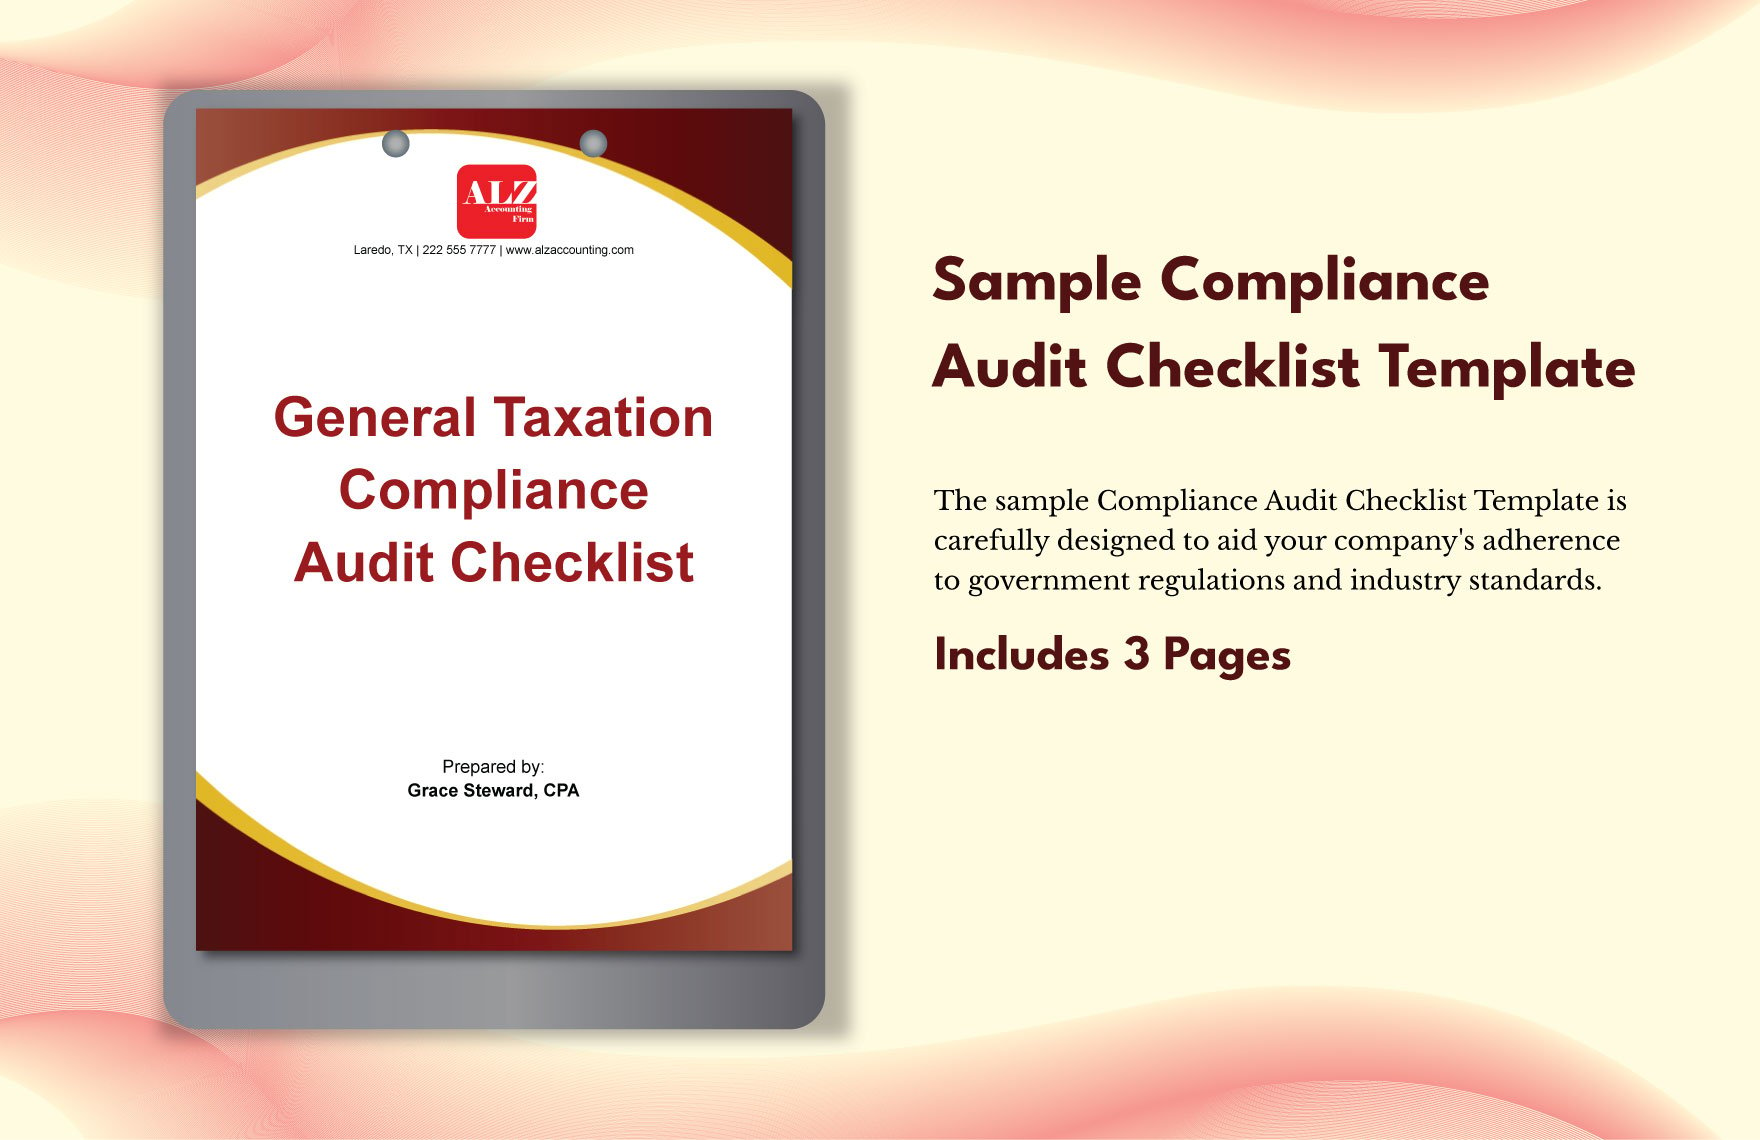 Sample Compliance Audit Checklist Template